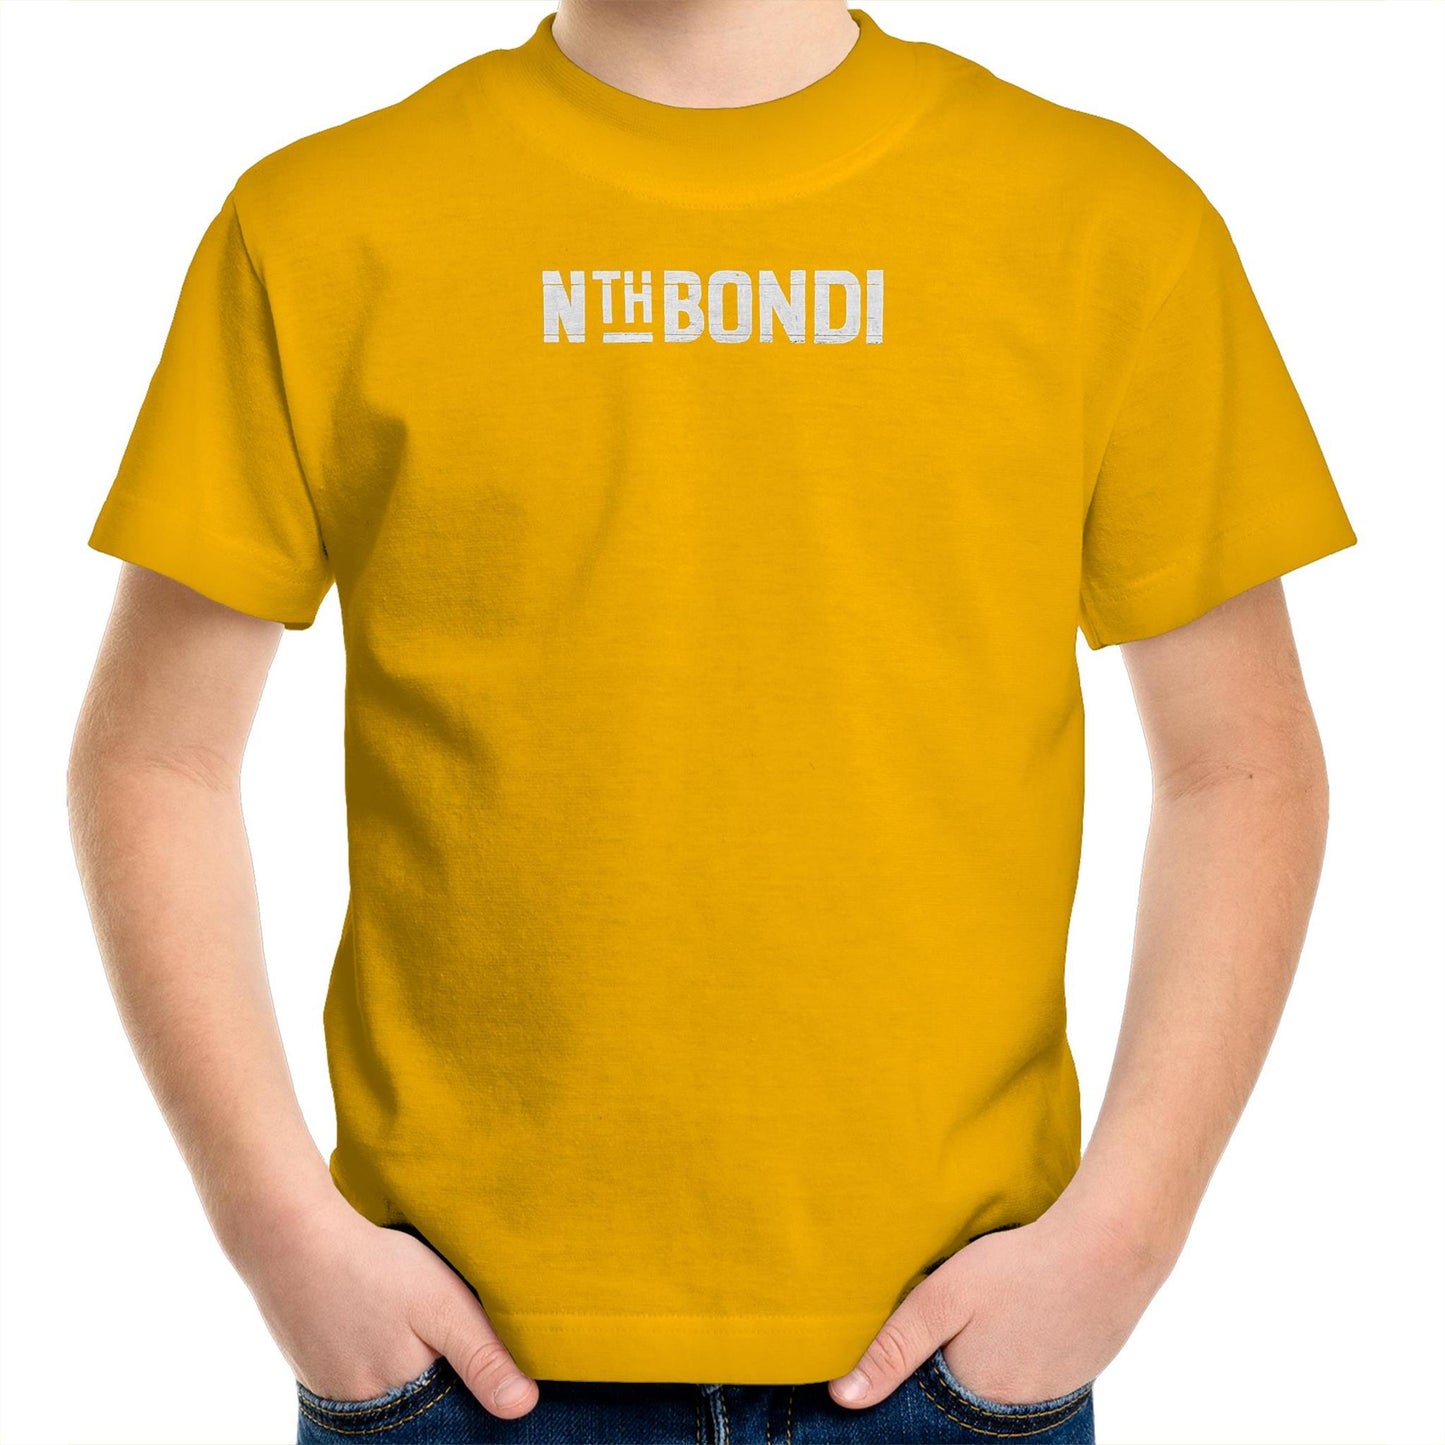 Nth BONDI T Shirts for Kids